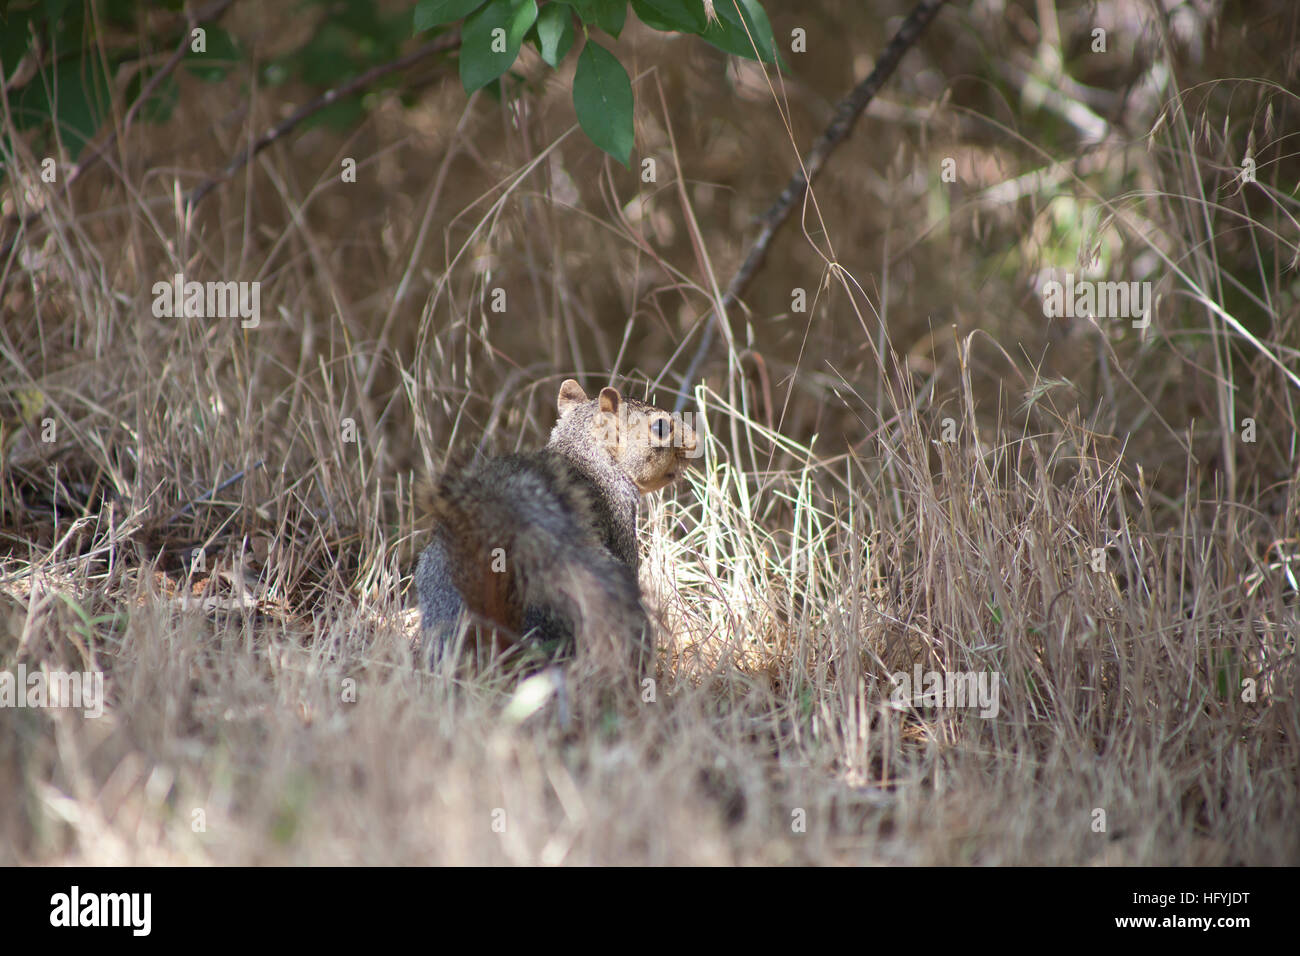 Lone squirrel in a field Stock Photo